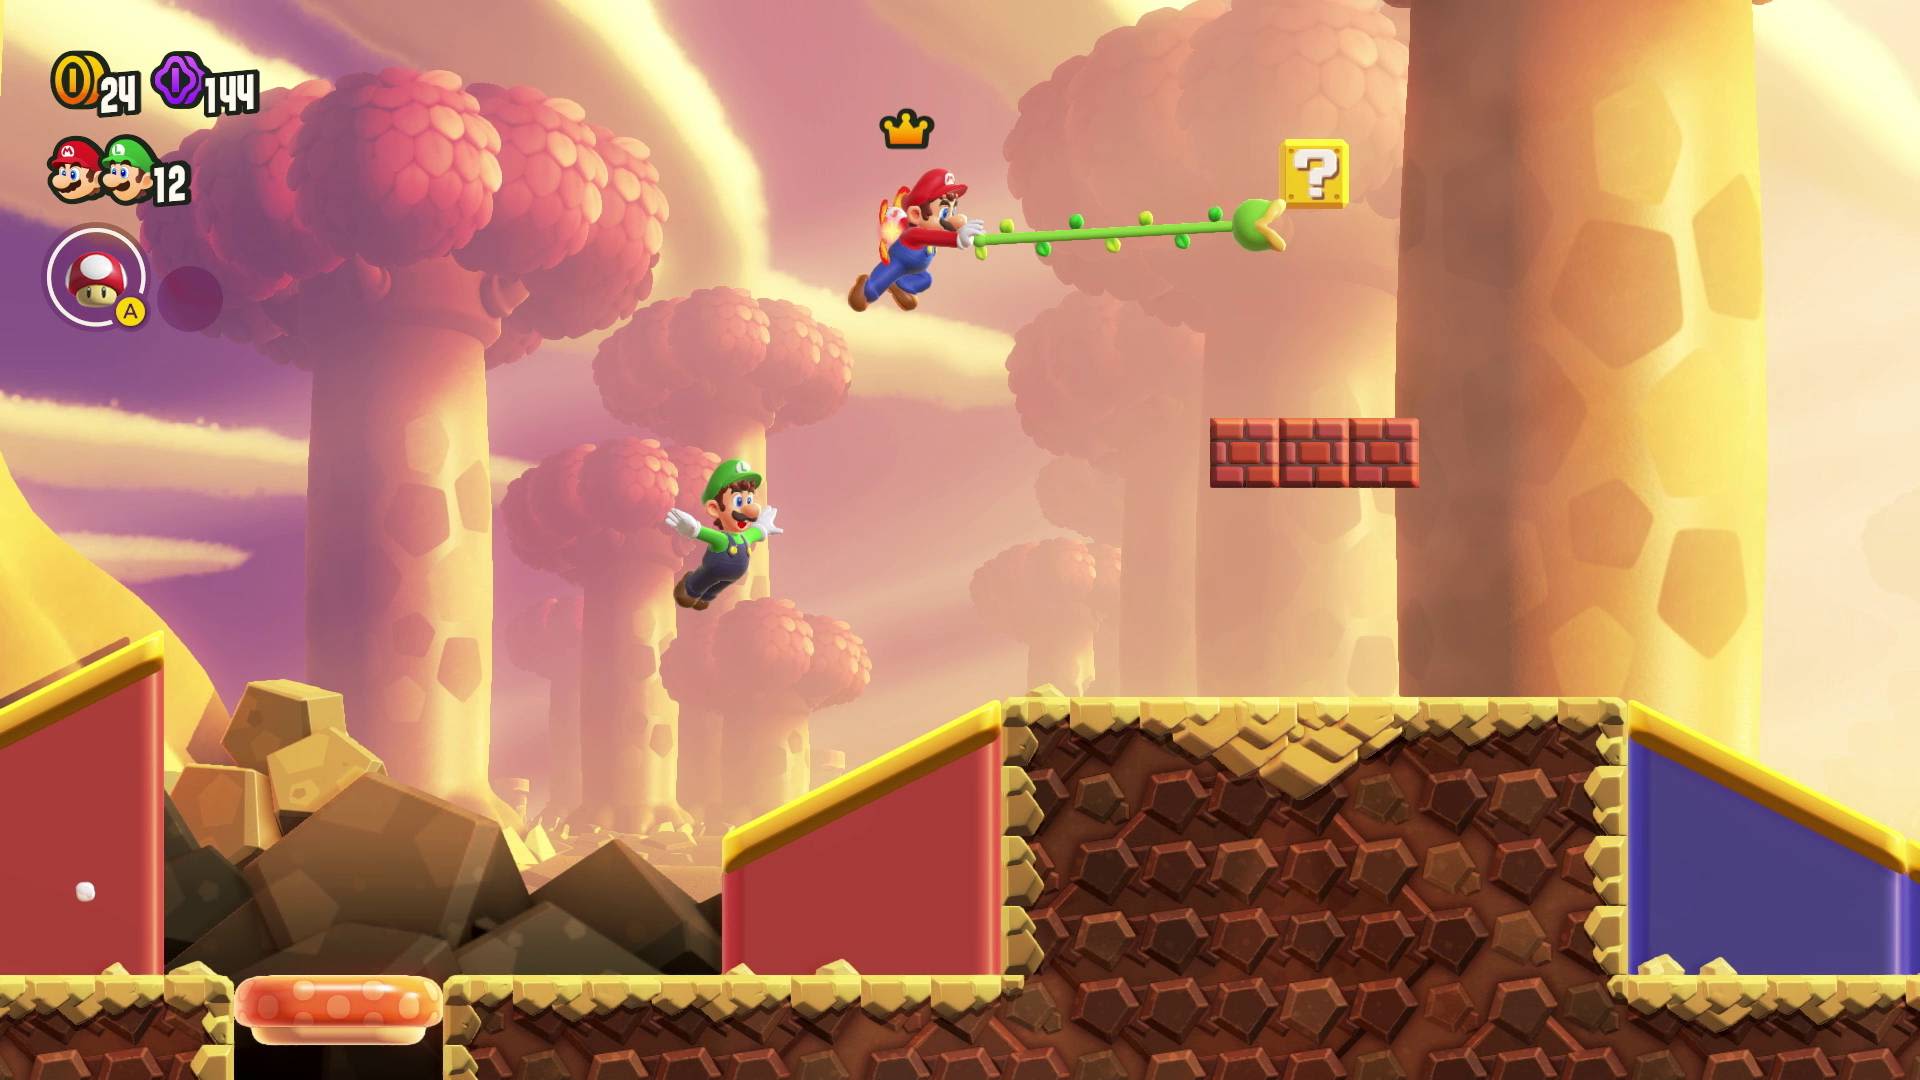 Review: Super Mario Bros. Wonder - My Nintendo News